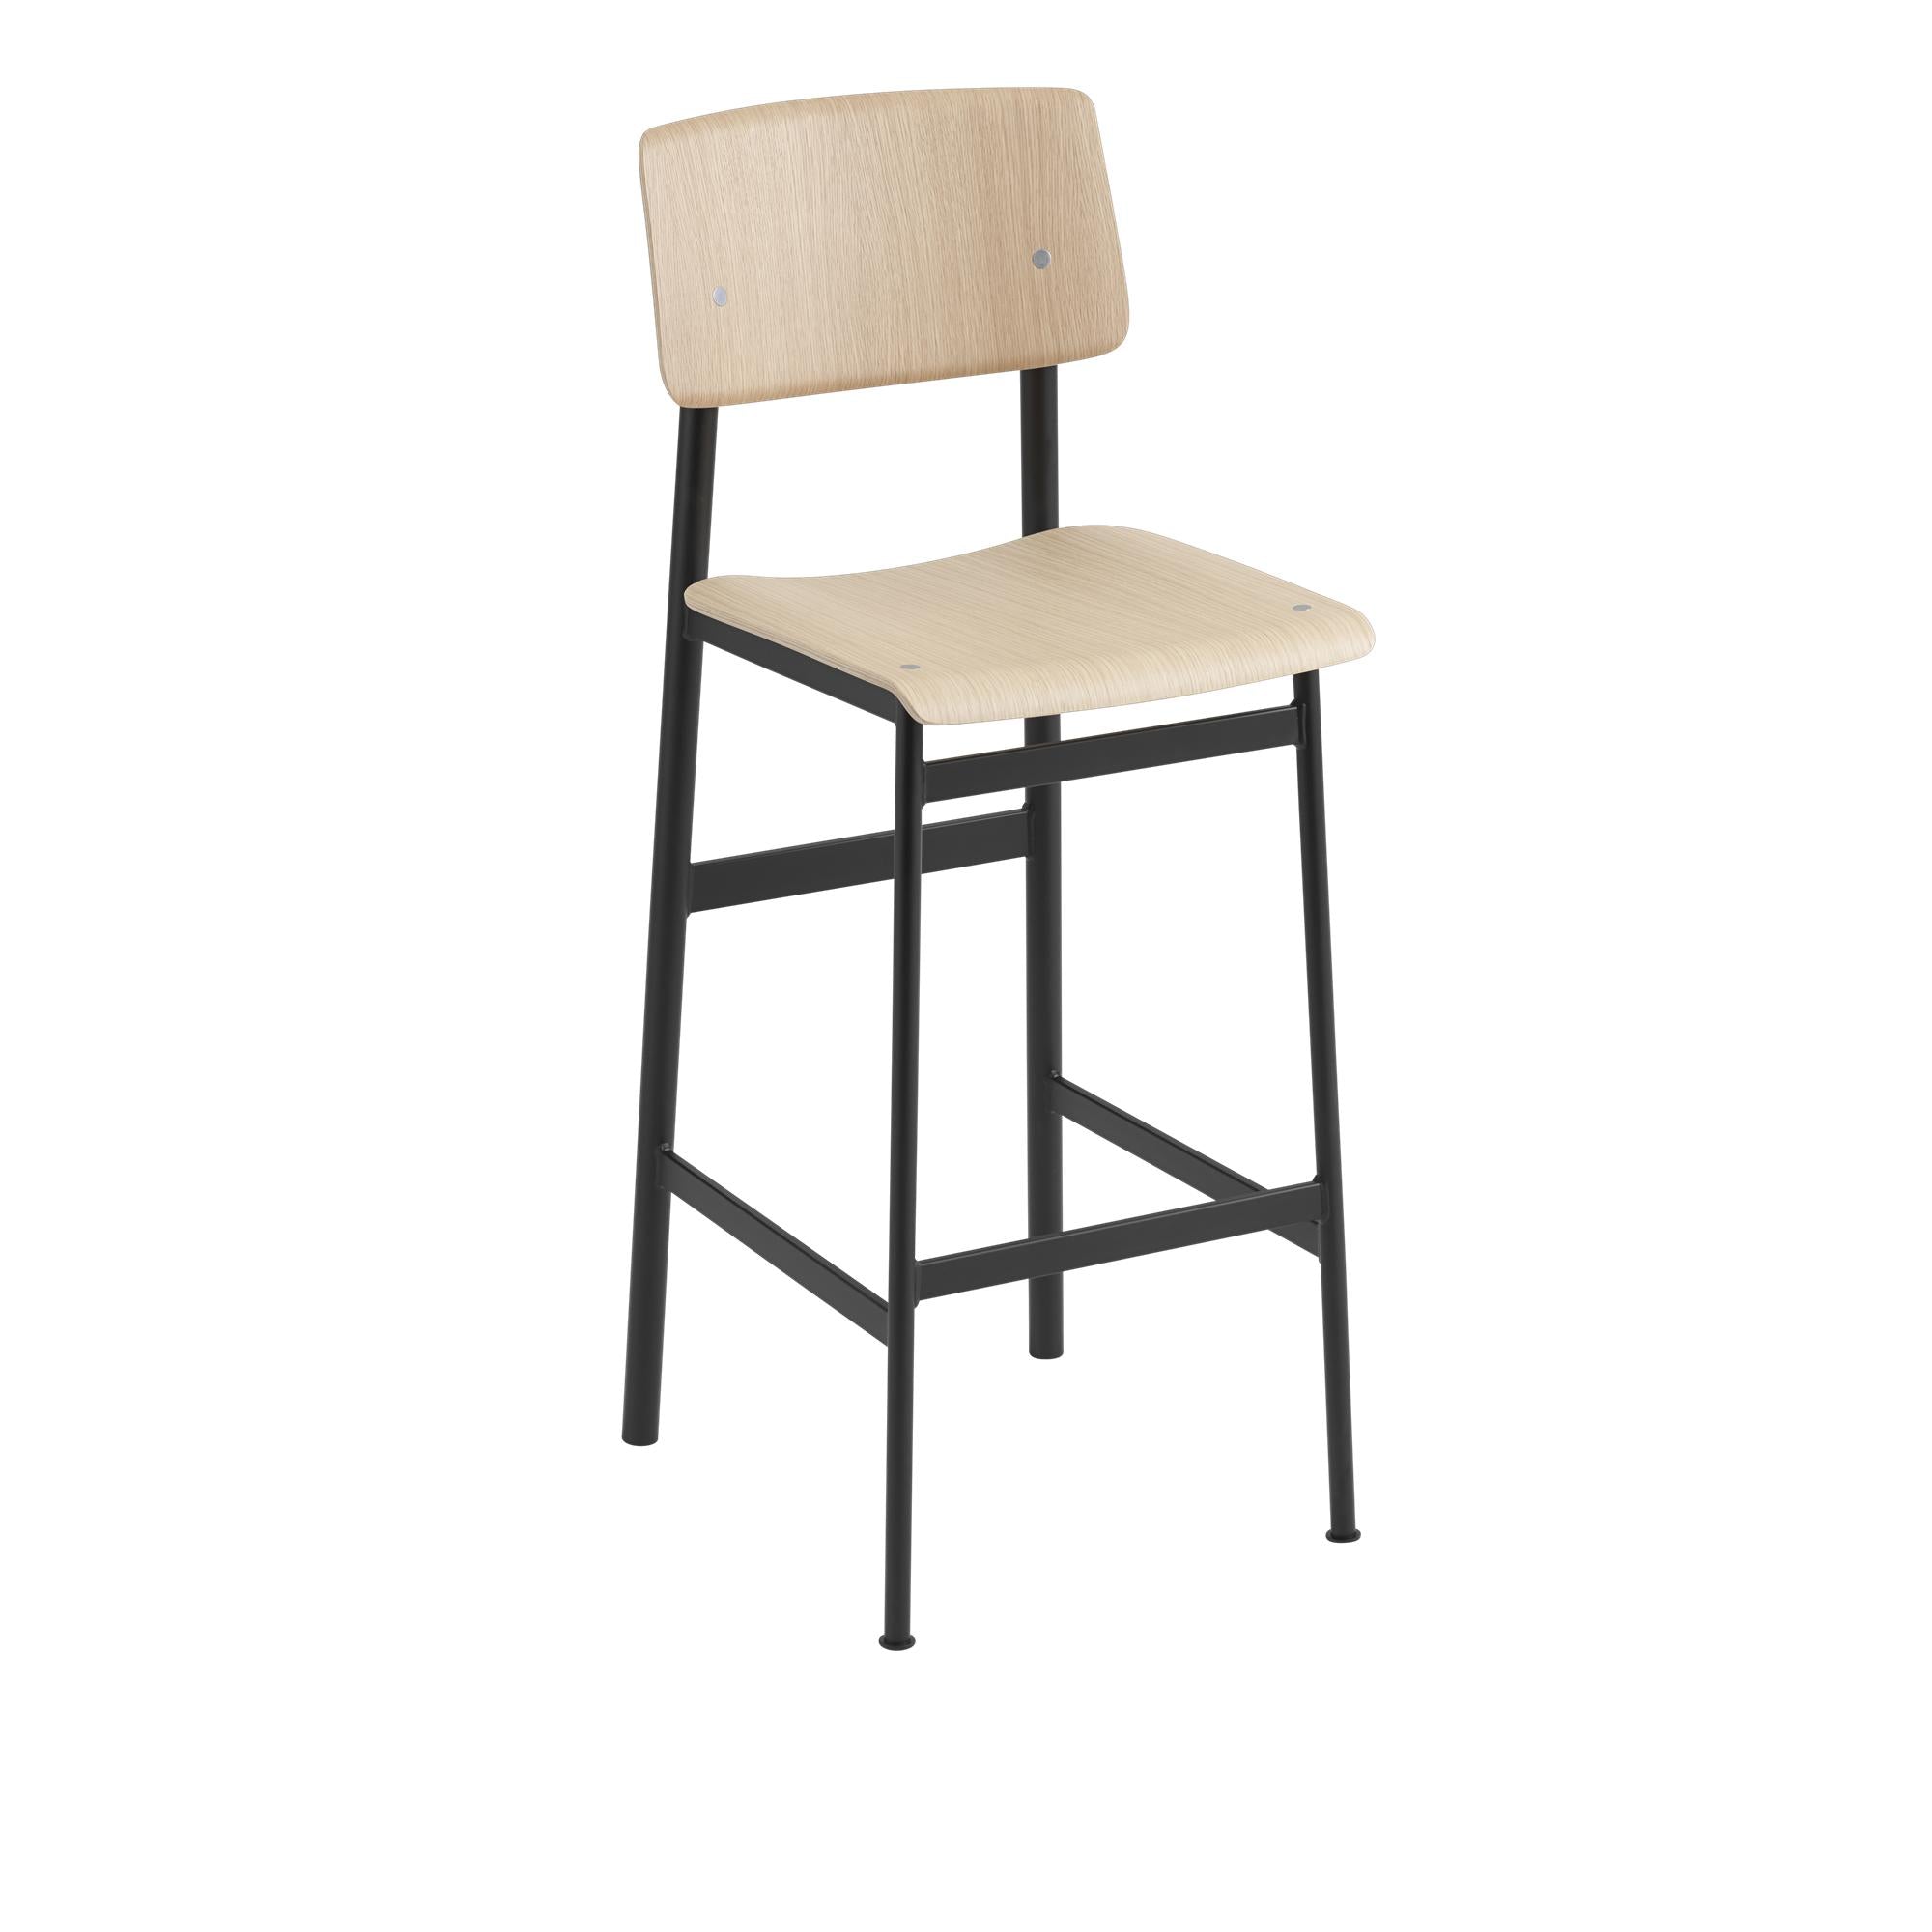 Muuto Loft stångstol ek, h 75 cm, svart/ek